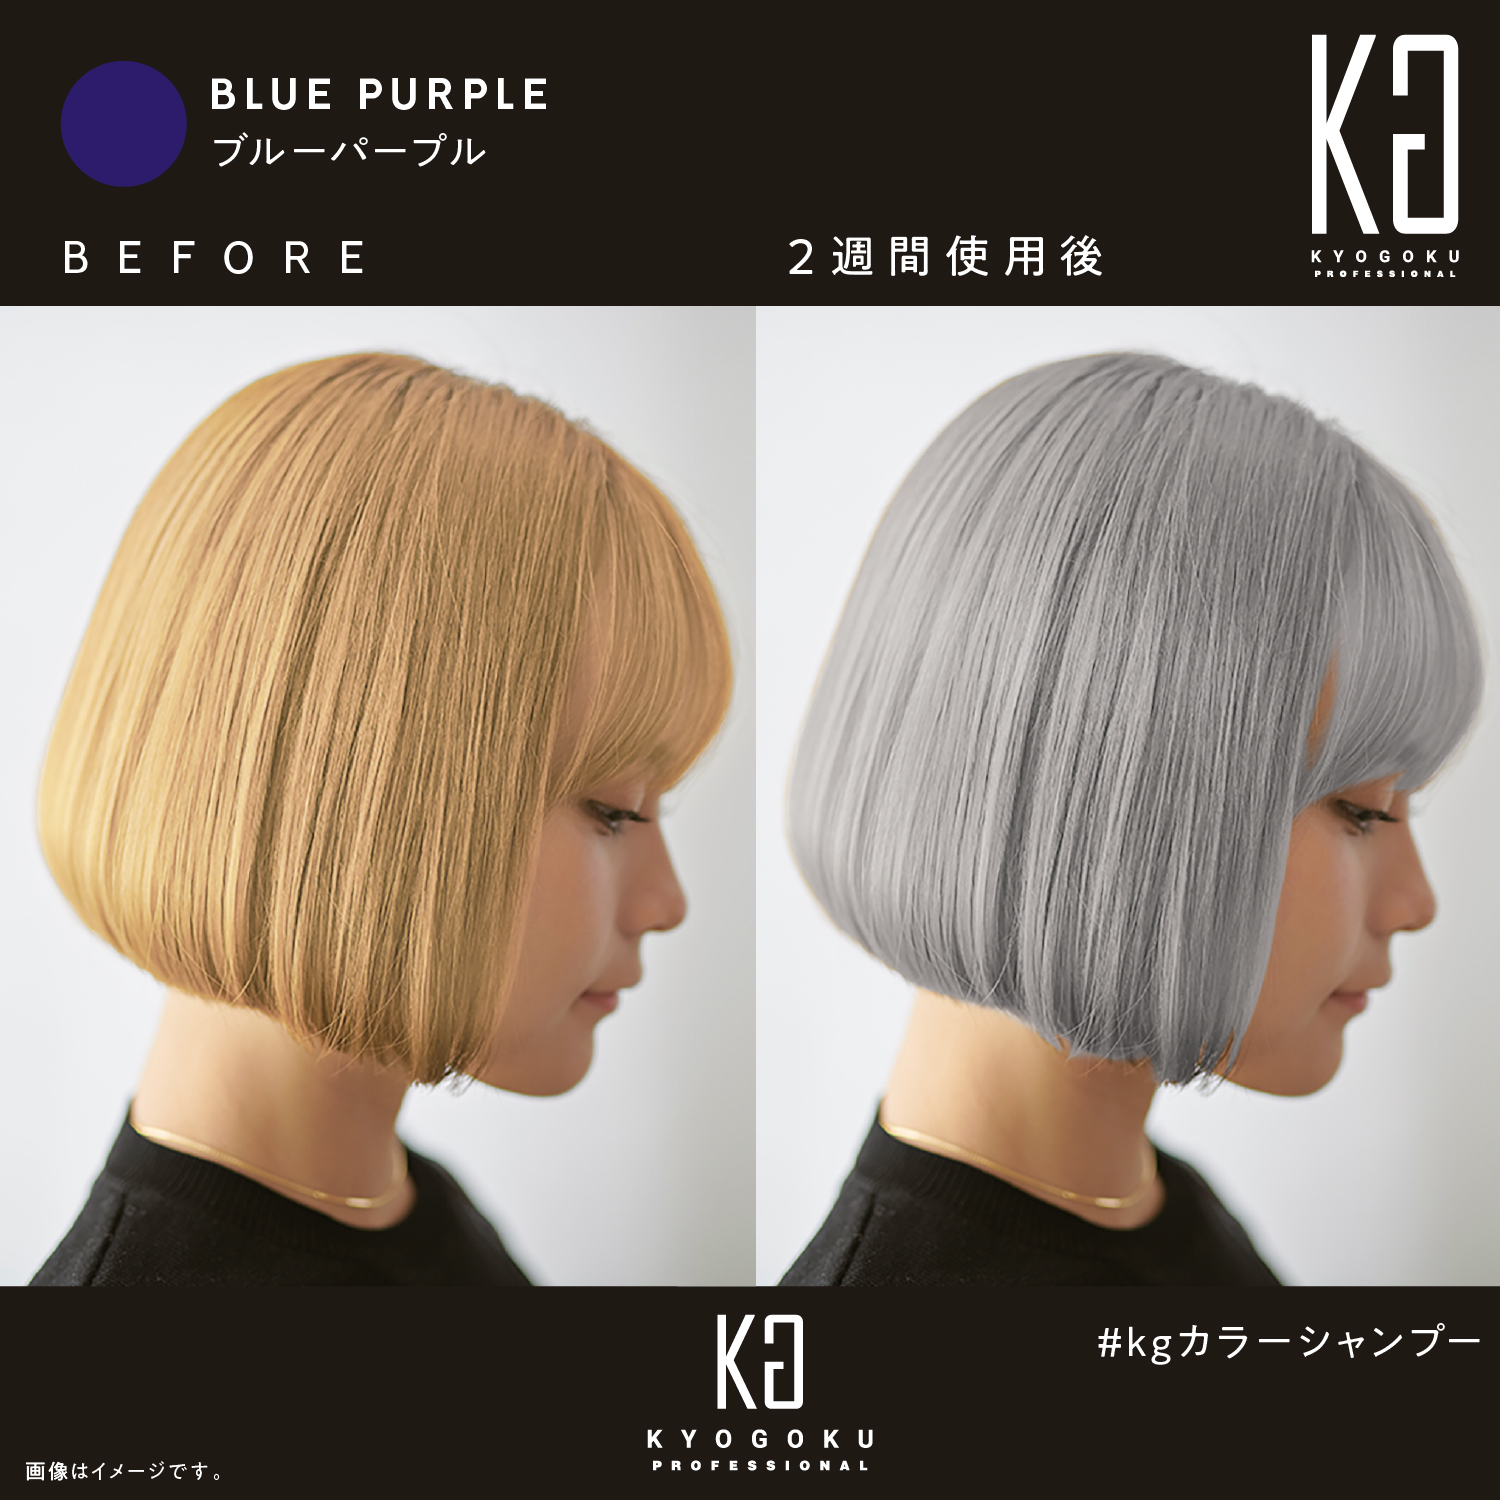 Kyogoku Professional KYOGOKU ブルーパープルカラーシャンプーBP ムラシャン 紫シャンプー ムラサキシャンプー